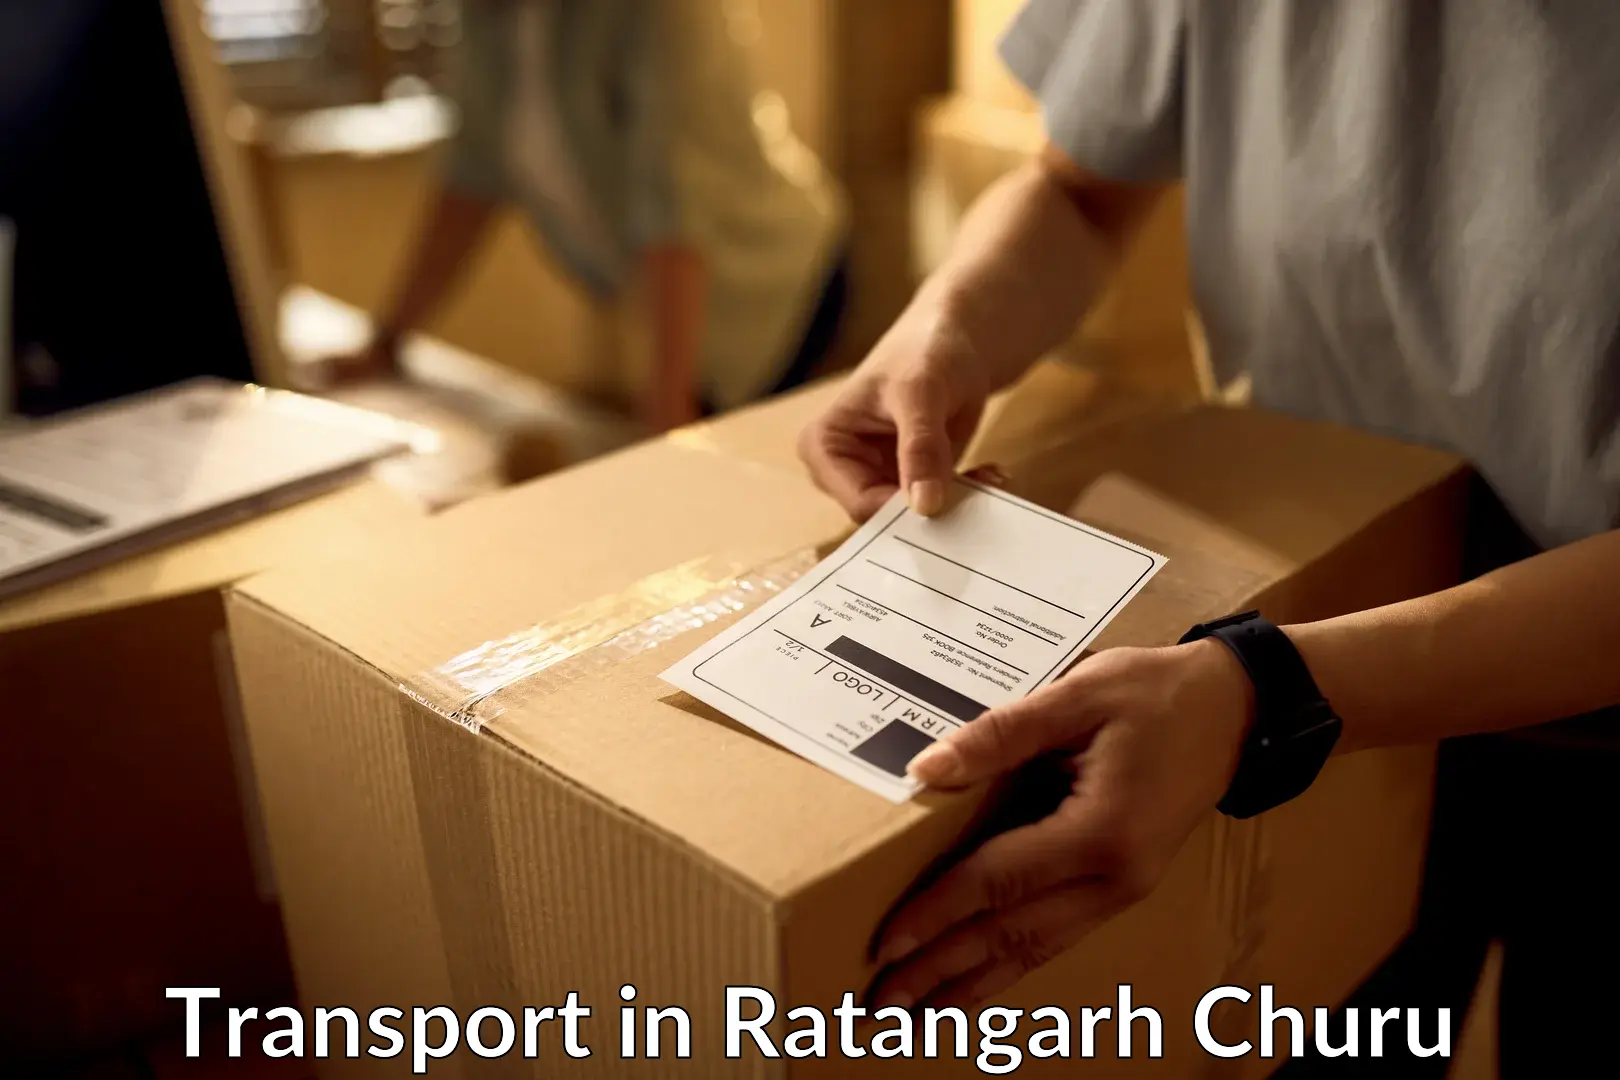 Transportation services in Ratangarh Churu